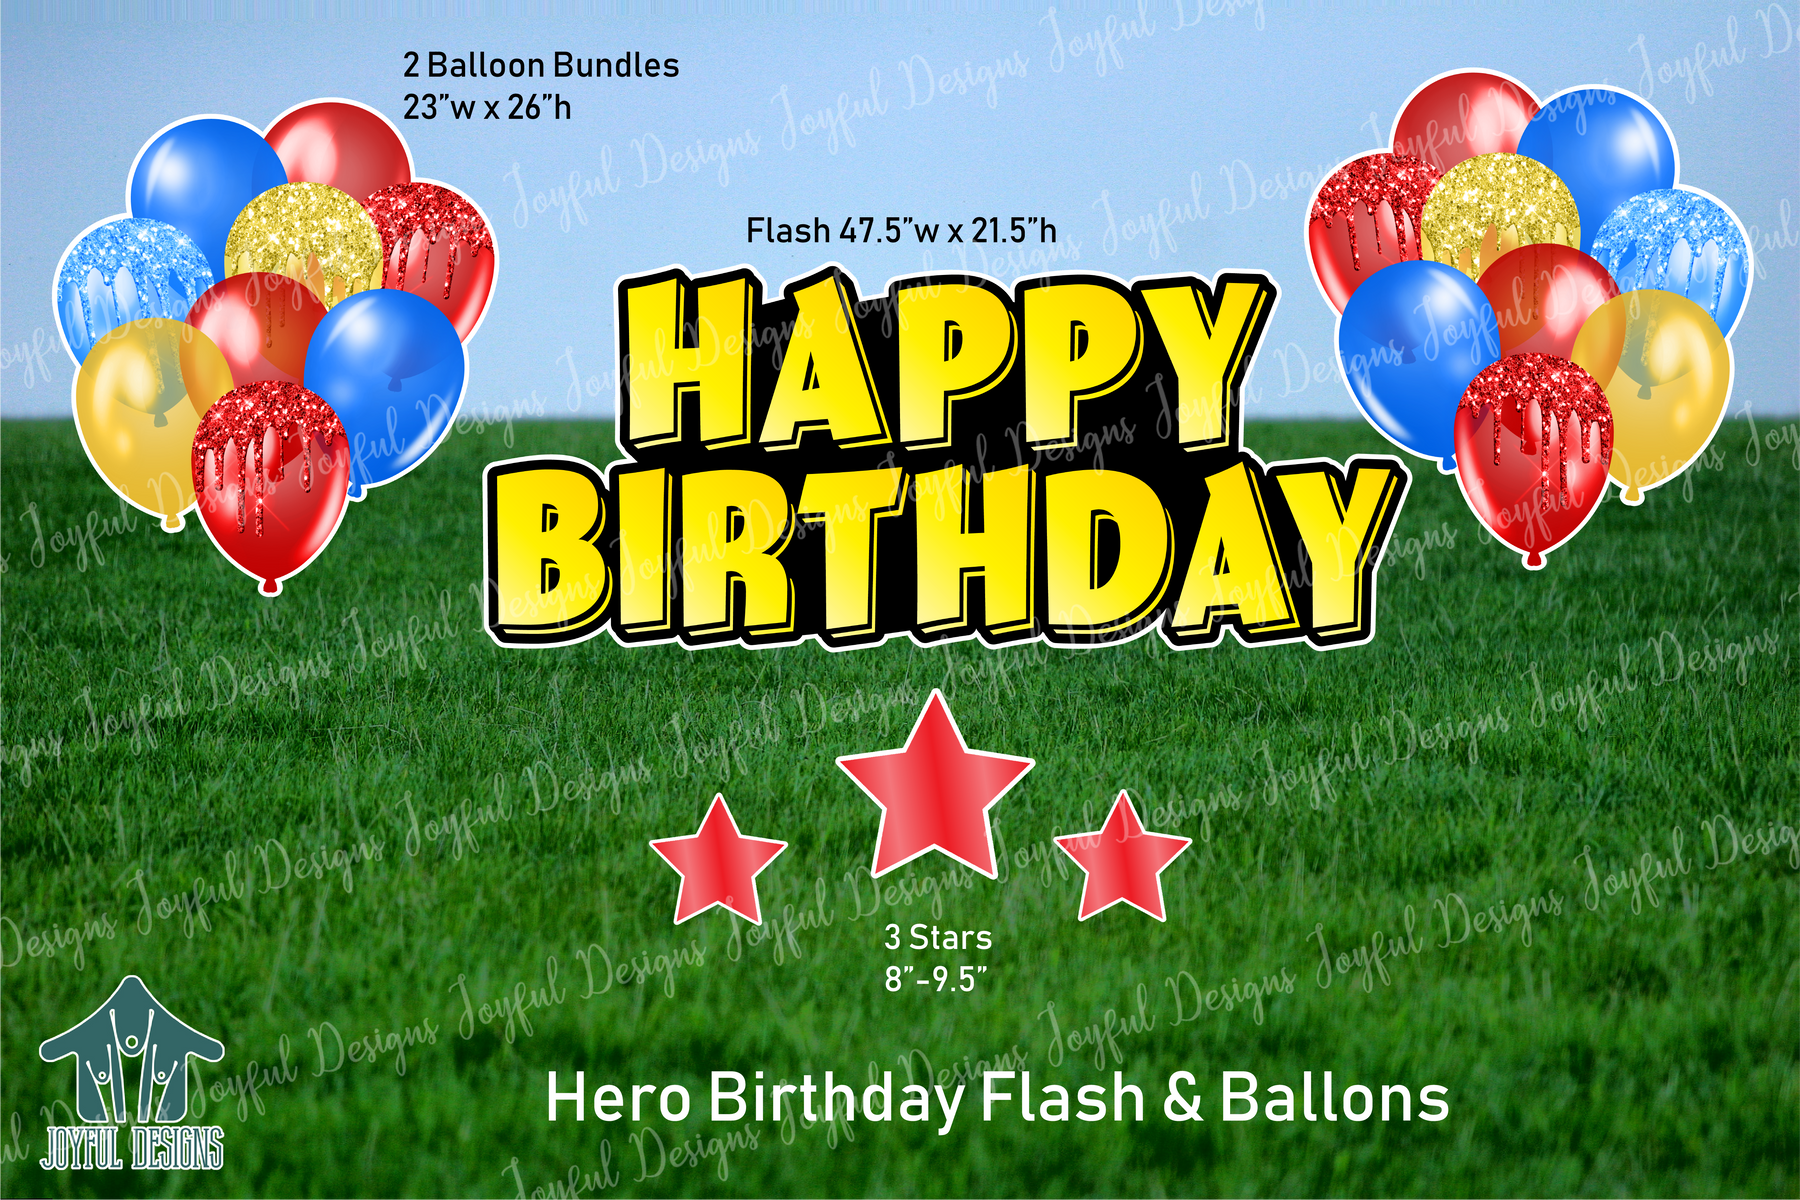 Hero Birthday Centerpiece & Balloons